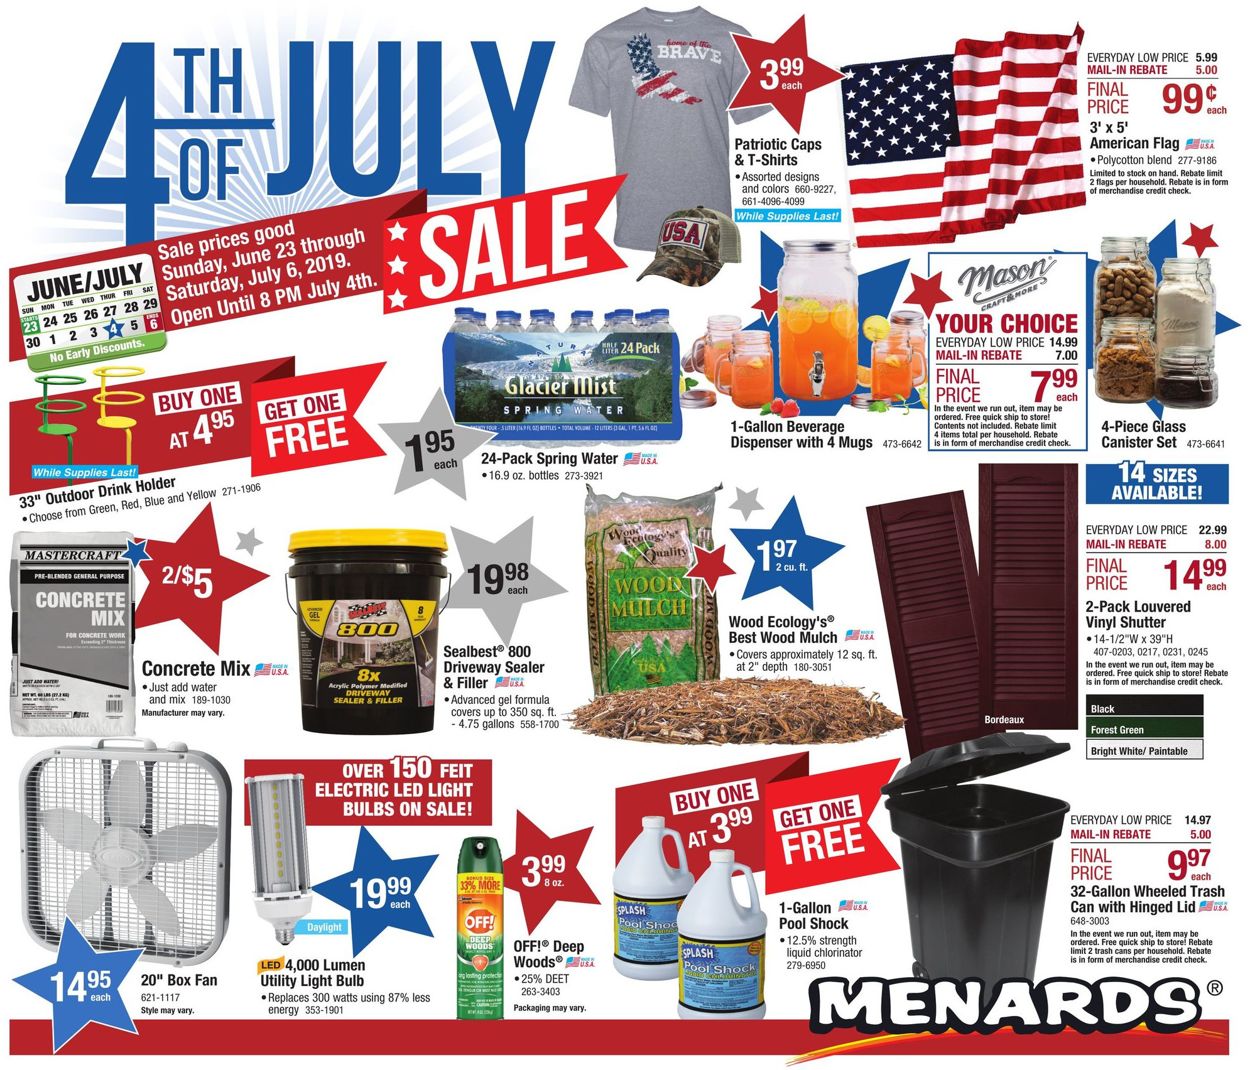 Menards Current weekly ad 06/23 - 07/06/2019 [3] - www.bagssaleusa.com